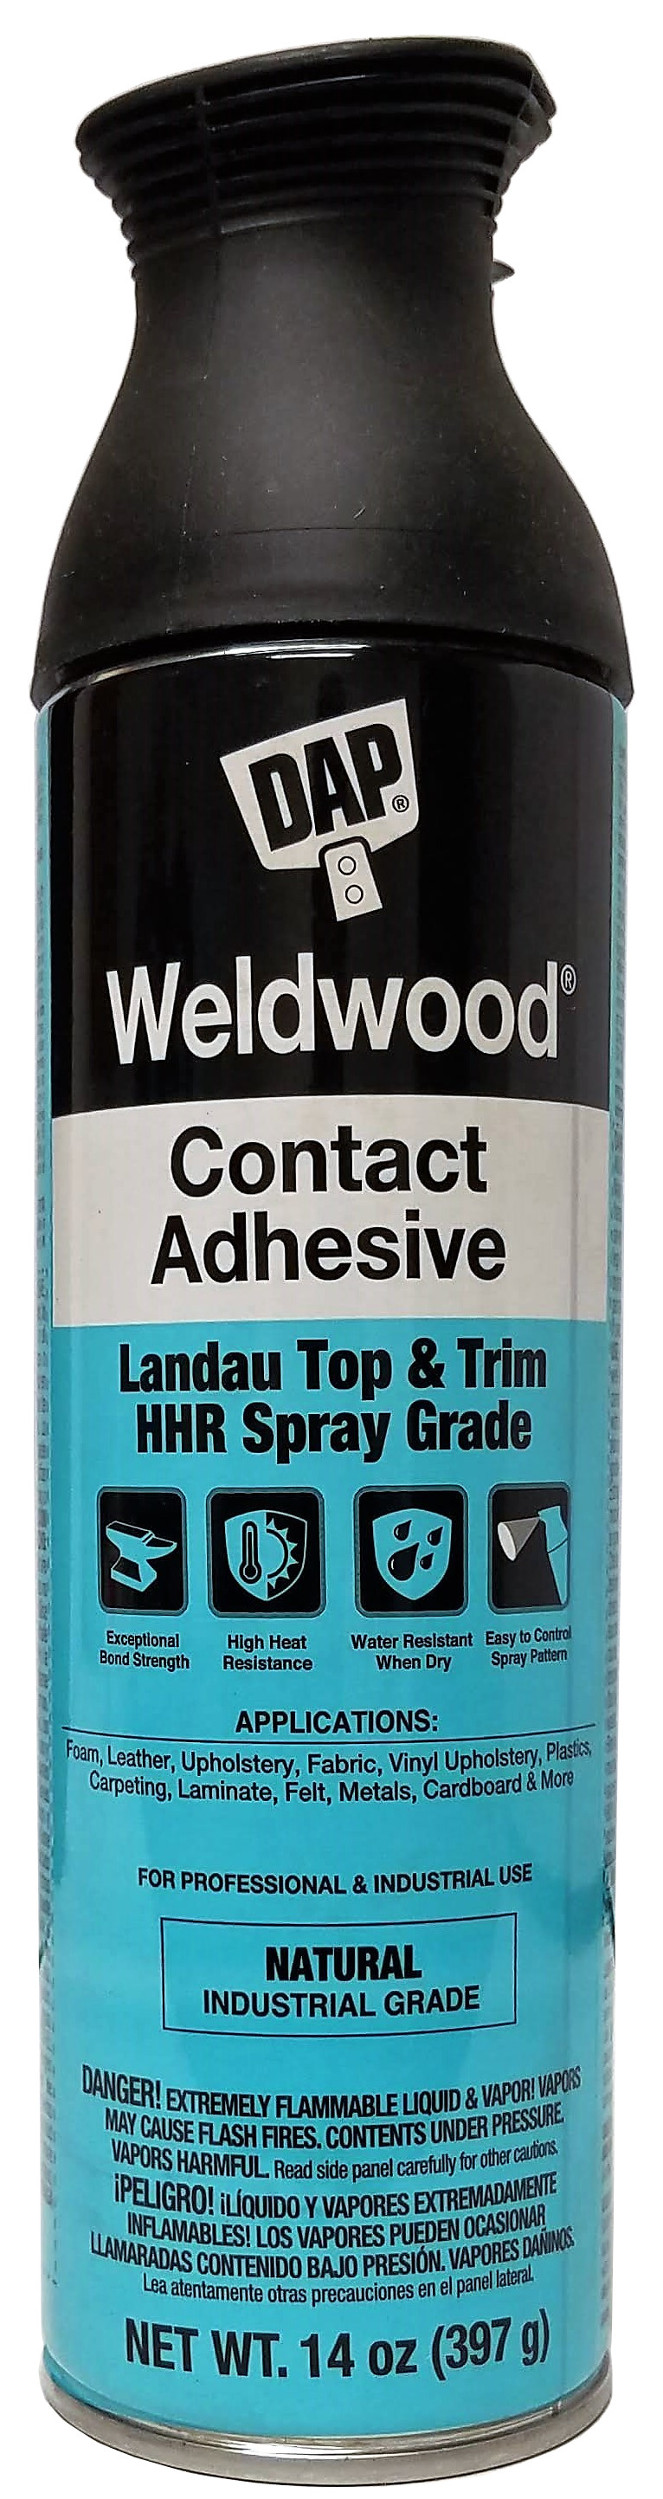 Spray adhesive, Aerosol adhesive